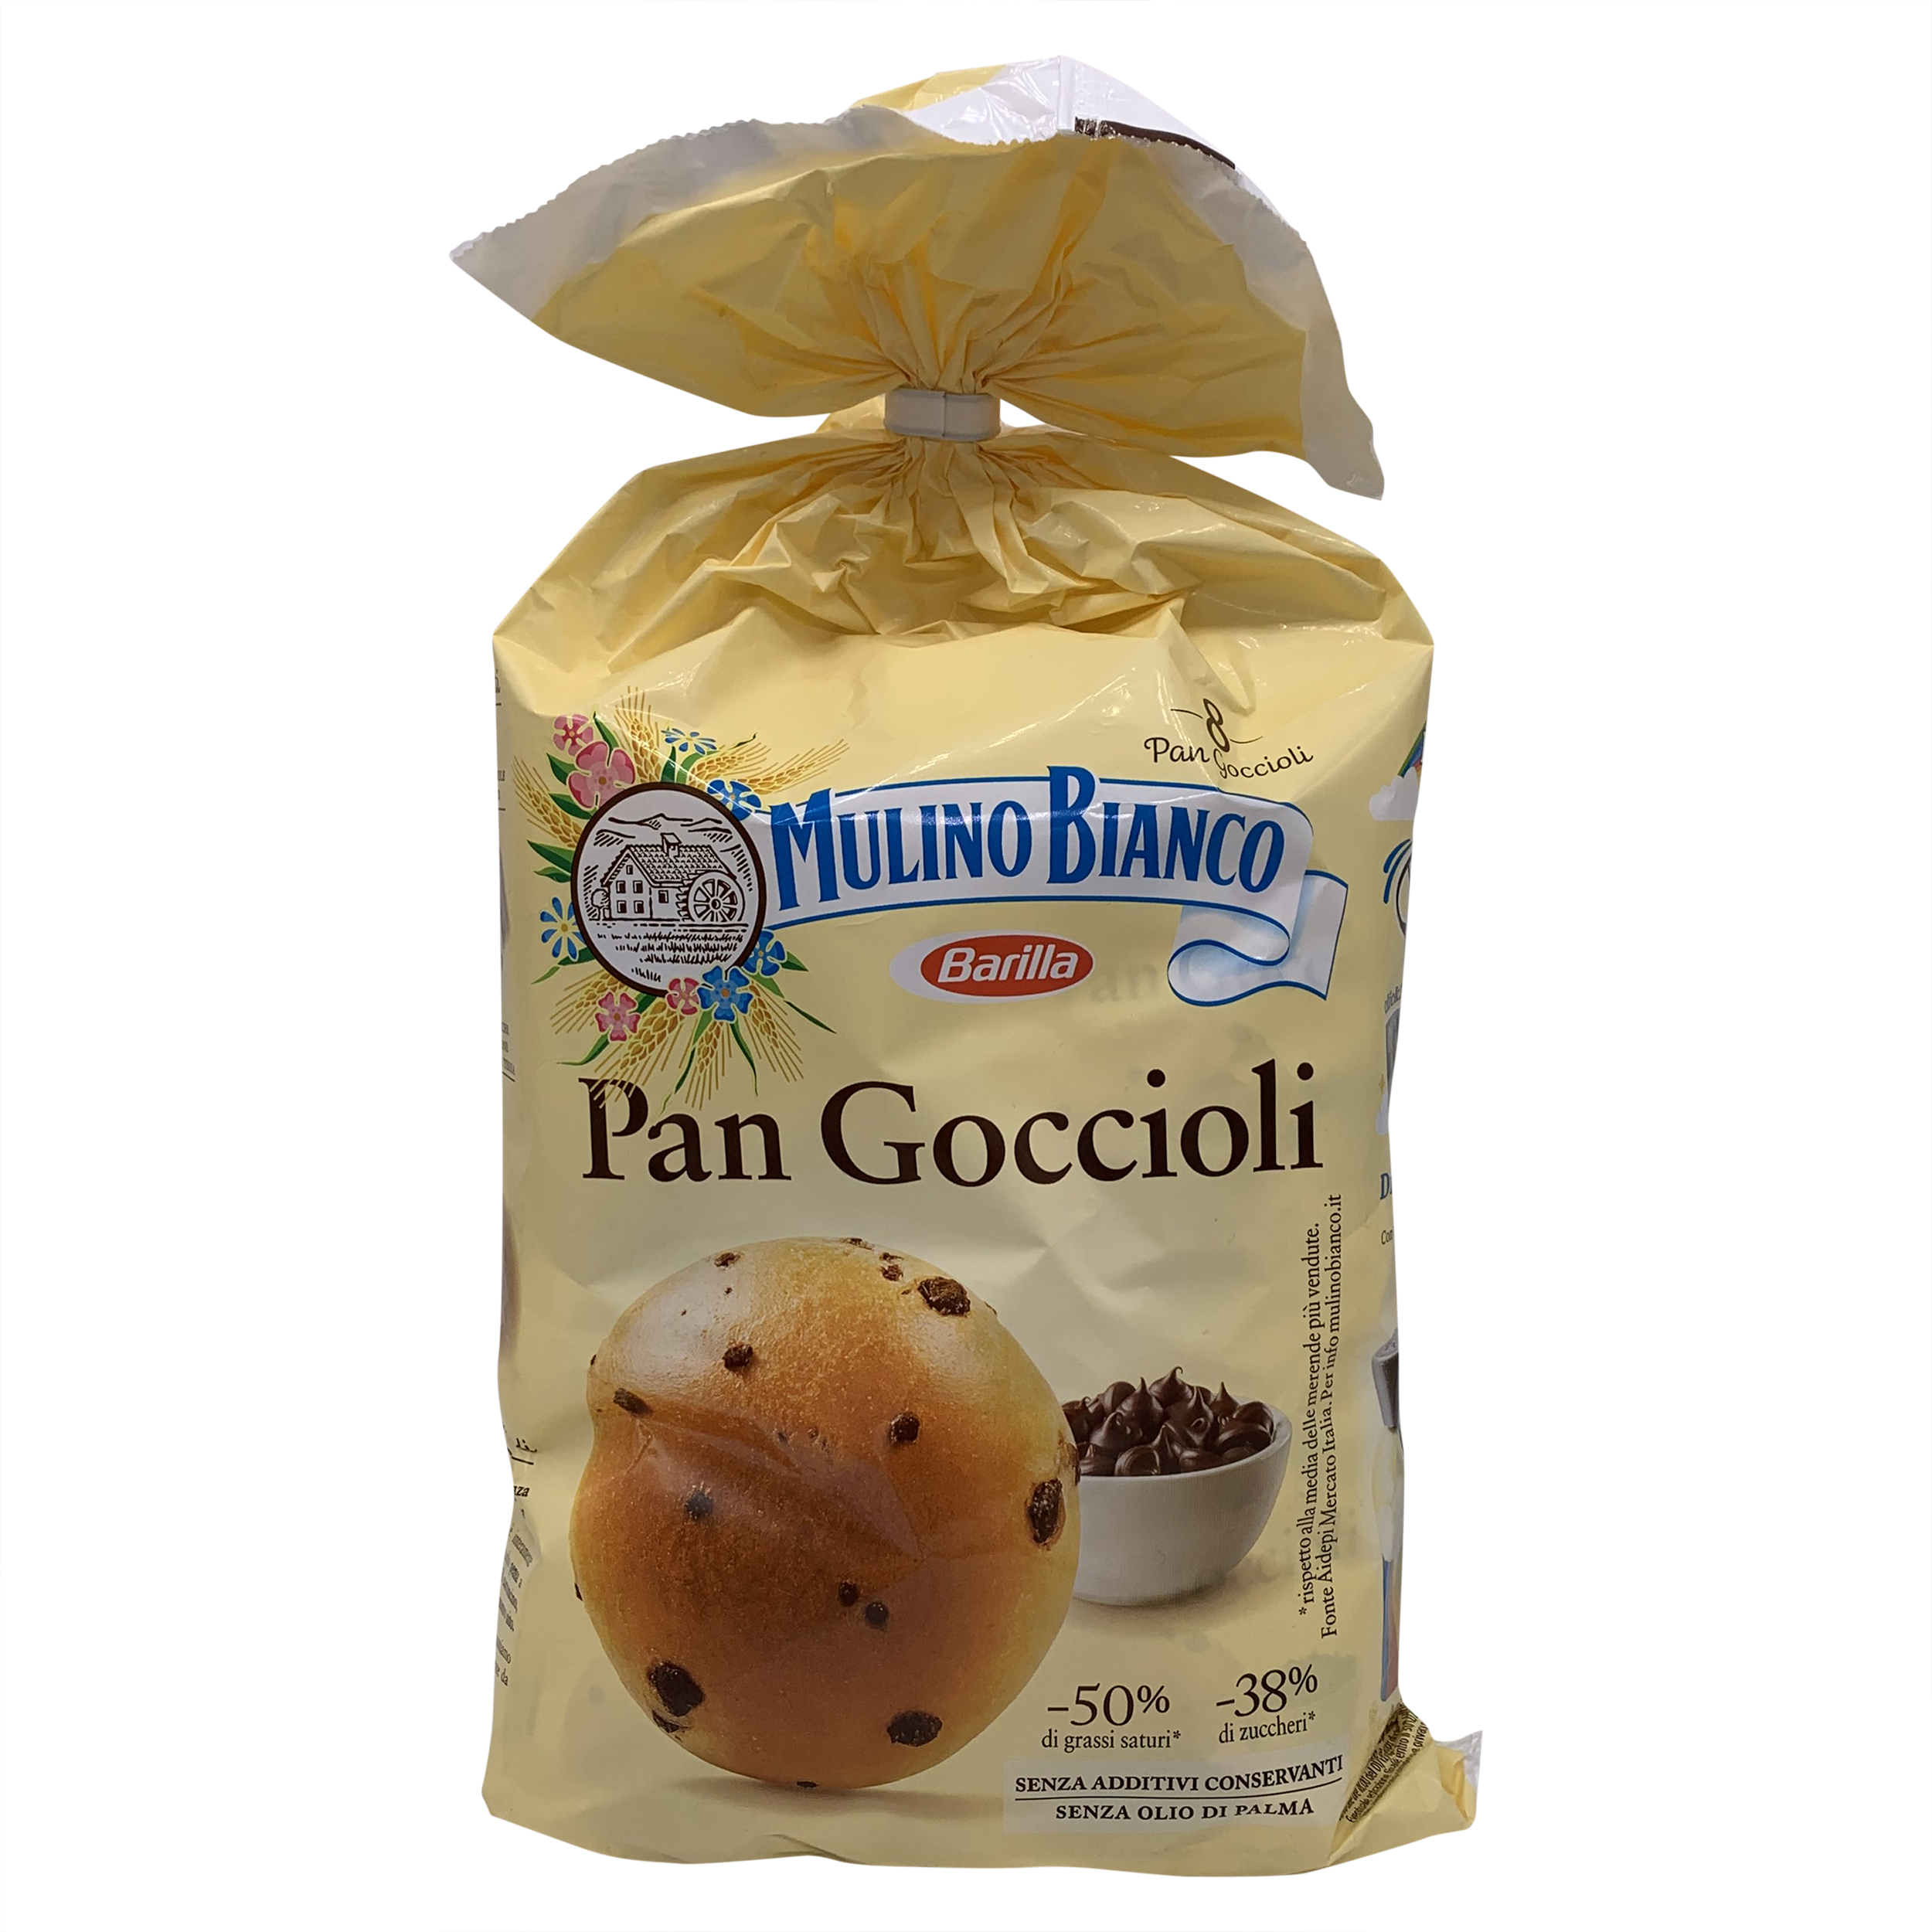 Mulino Bianco, Italian Cookies, Mulino Bianco, Pan Goccioli 8 pieces 336  g, Italian Biscuits